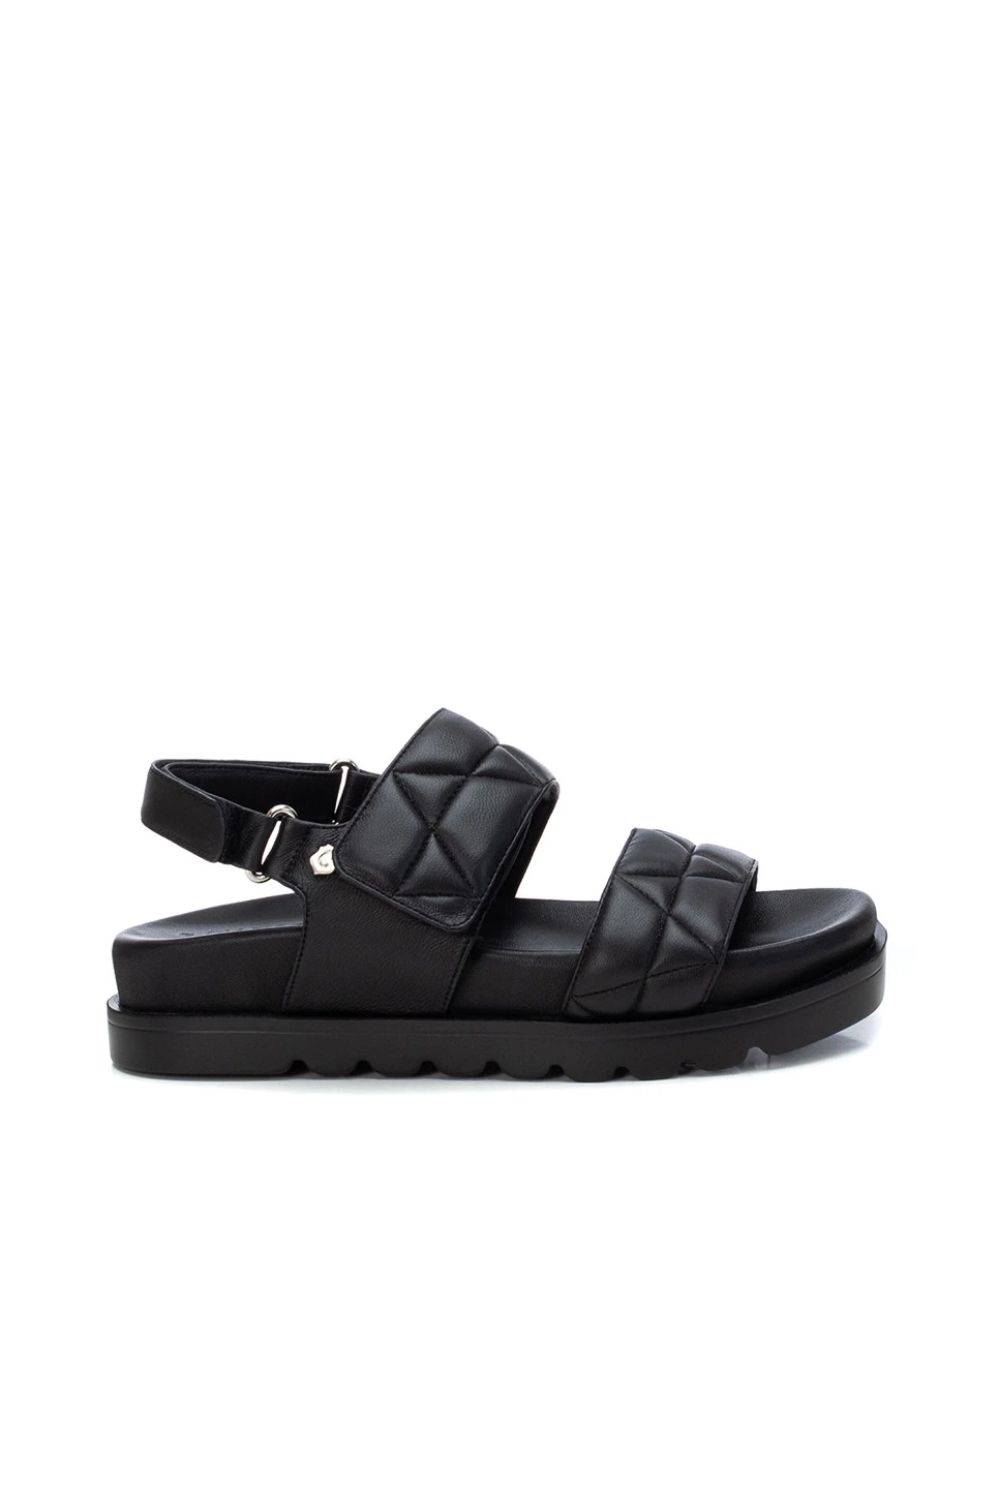 Sandalias de plataforma en color negro